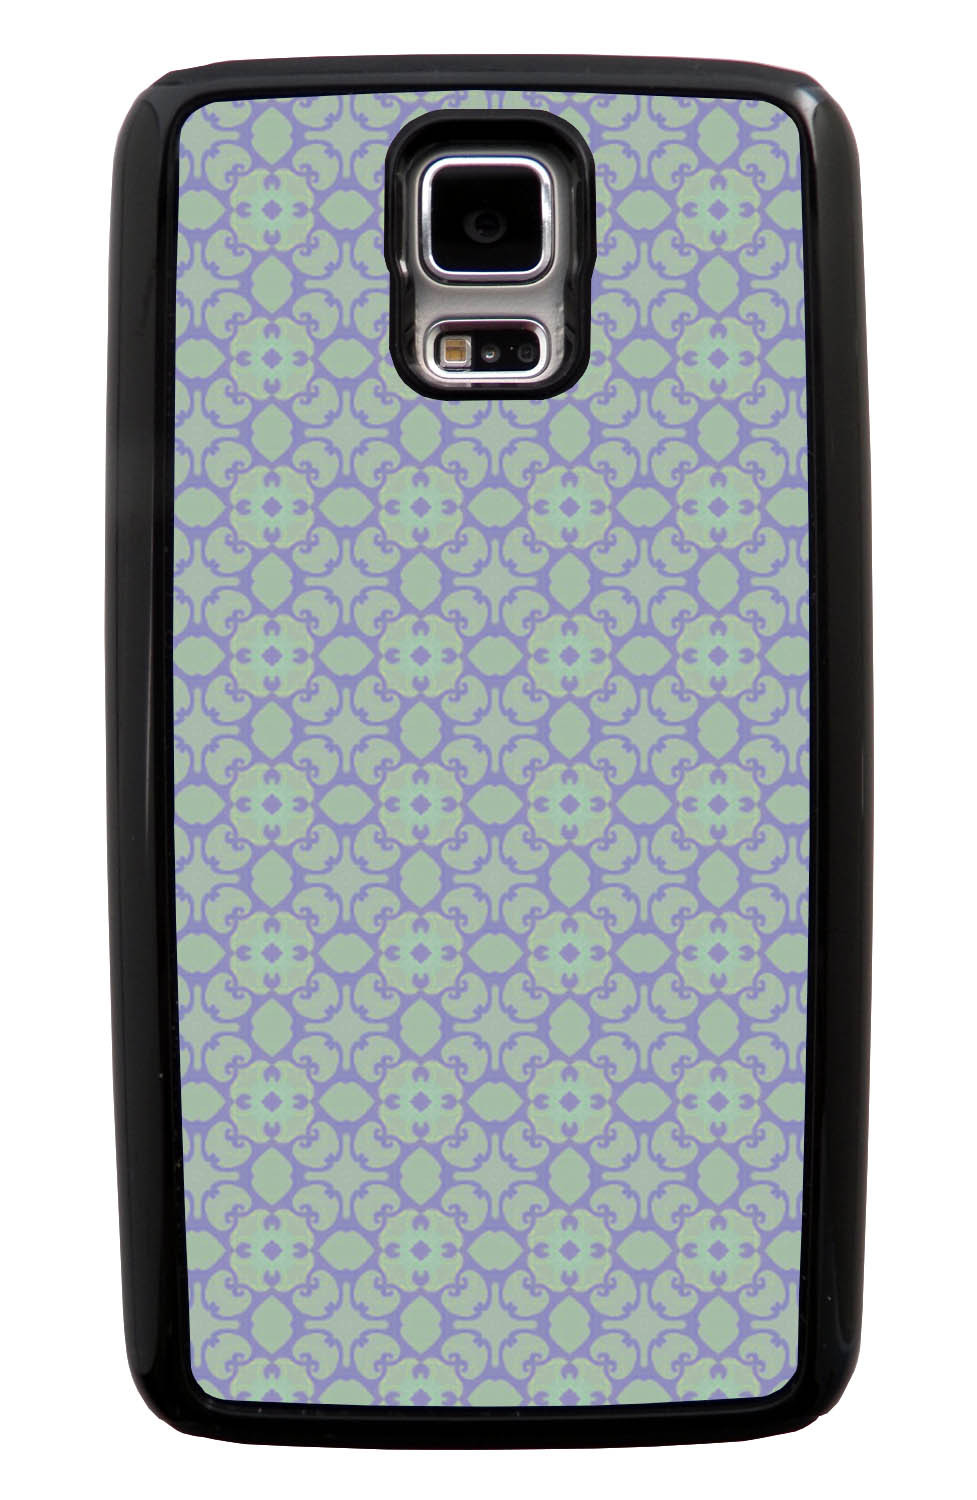 Samsung Galaxy S5 / SV Abstract Case - Pale Green - Flower Petal Like - Black Tough Hybrid Case